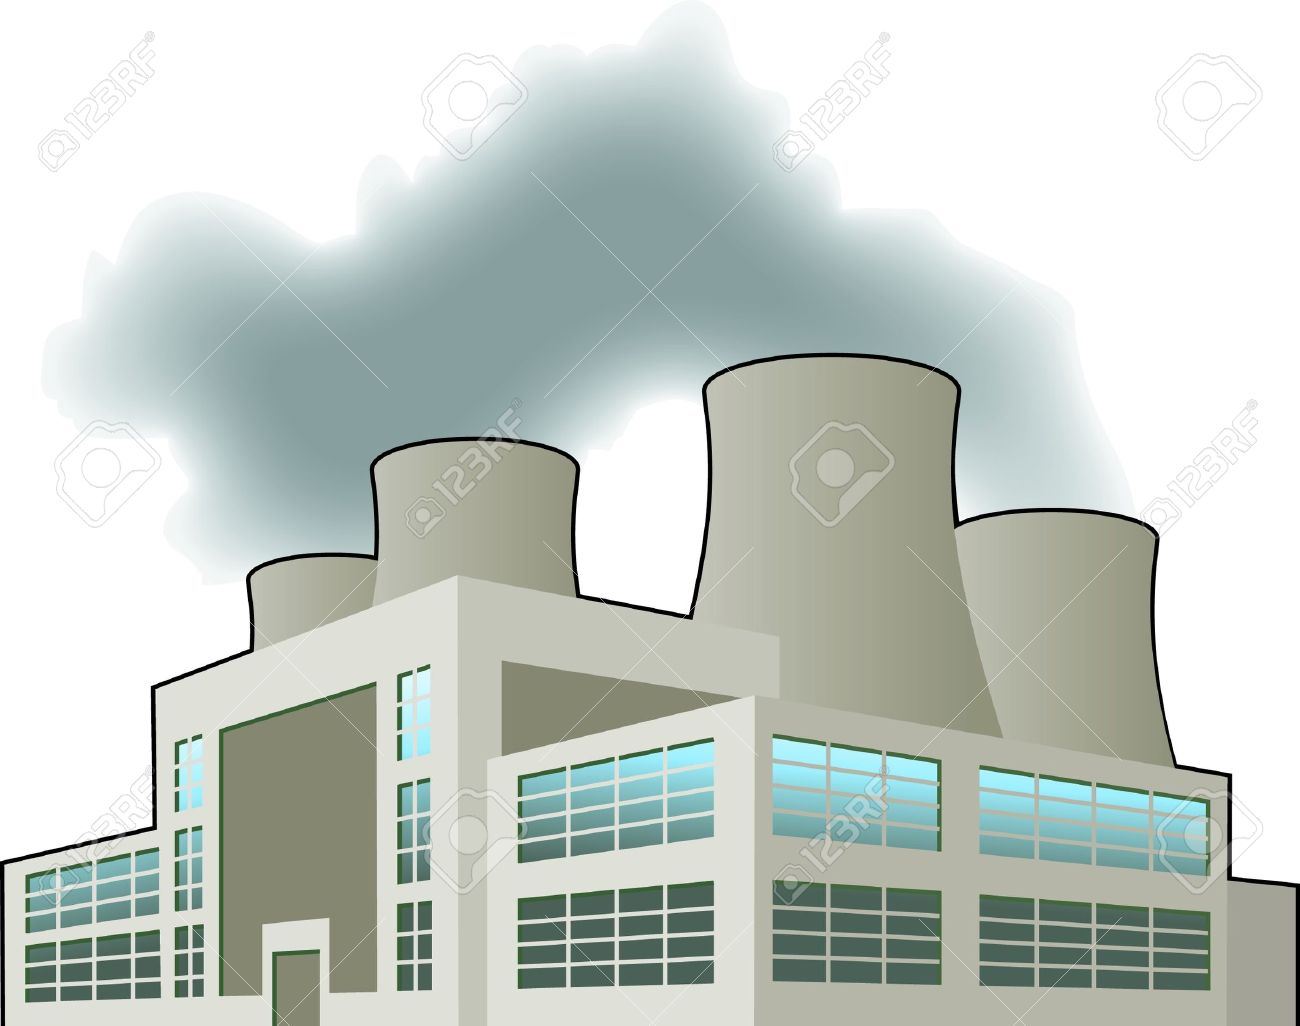 nuclear power plant clipart - photo #9